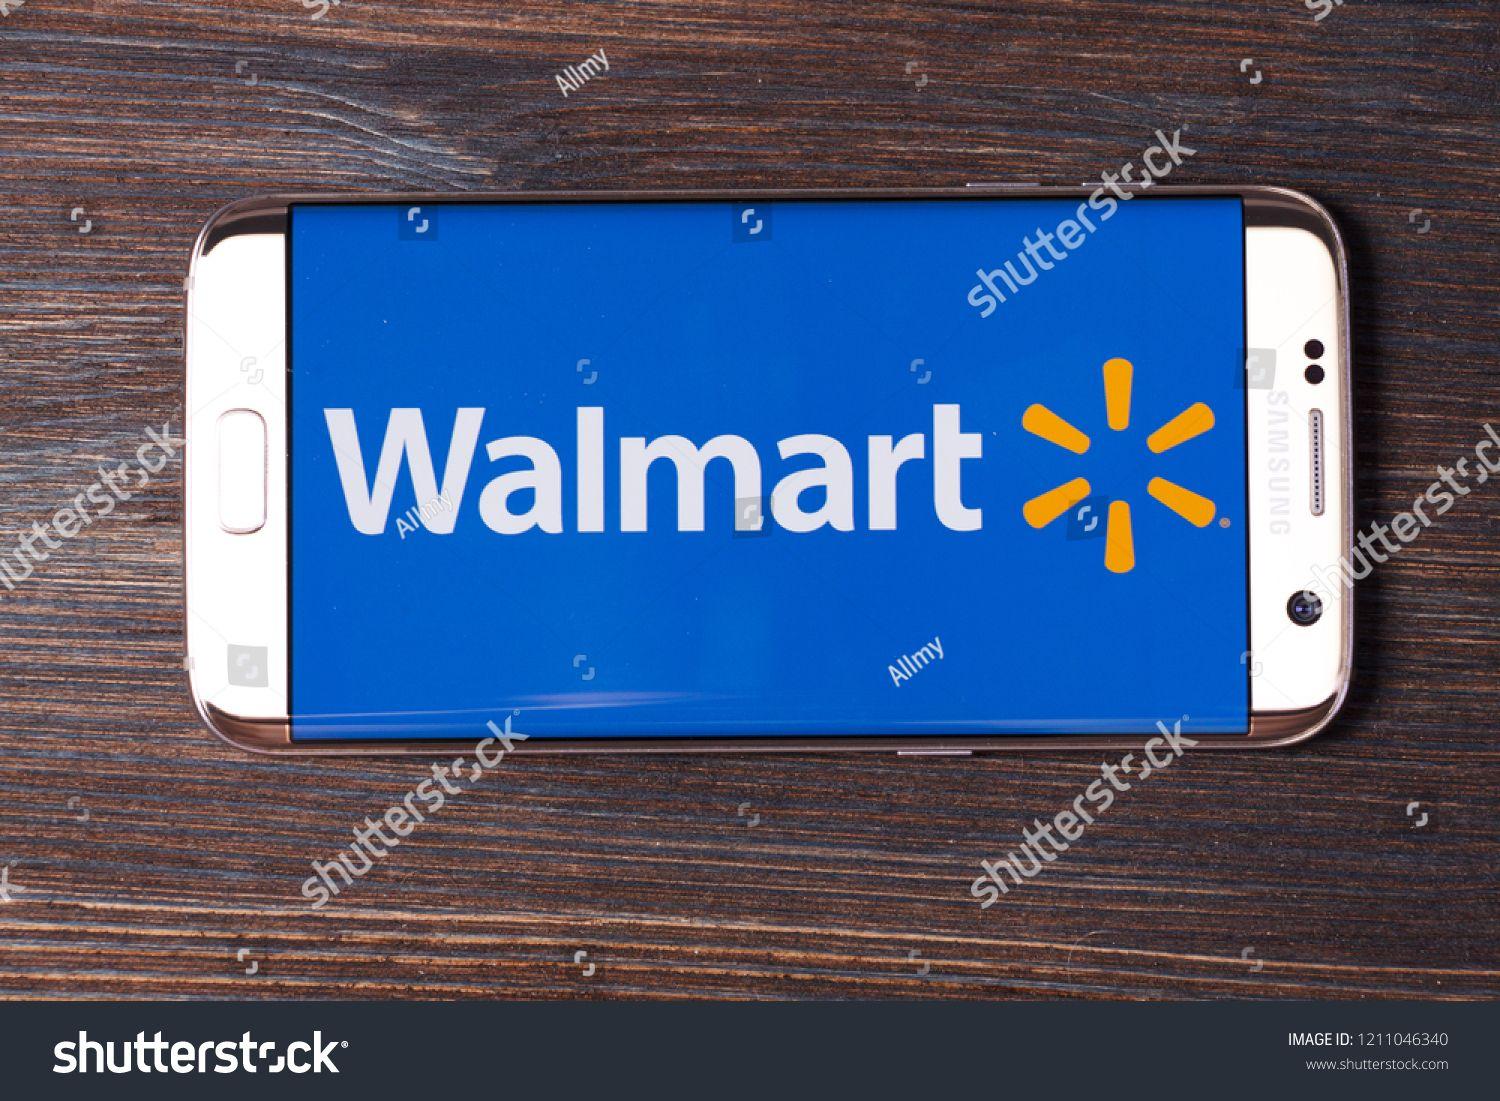 Walmart App Logo - Kazan, Russian Federation 2018: Walmart app logo on Samsung